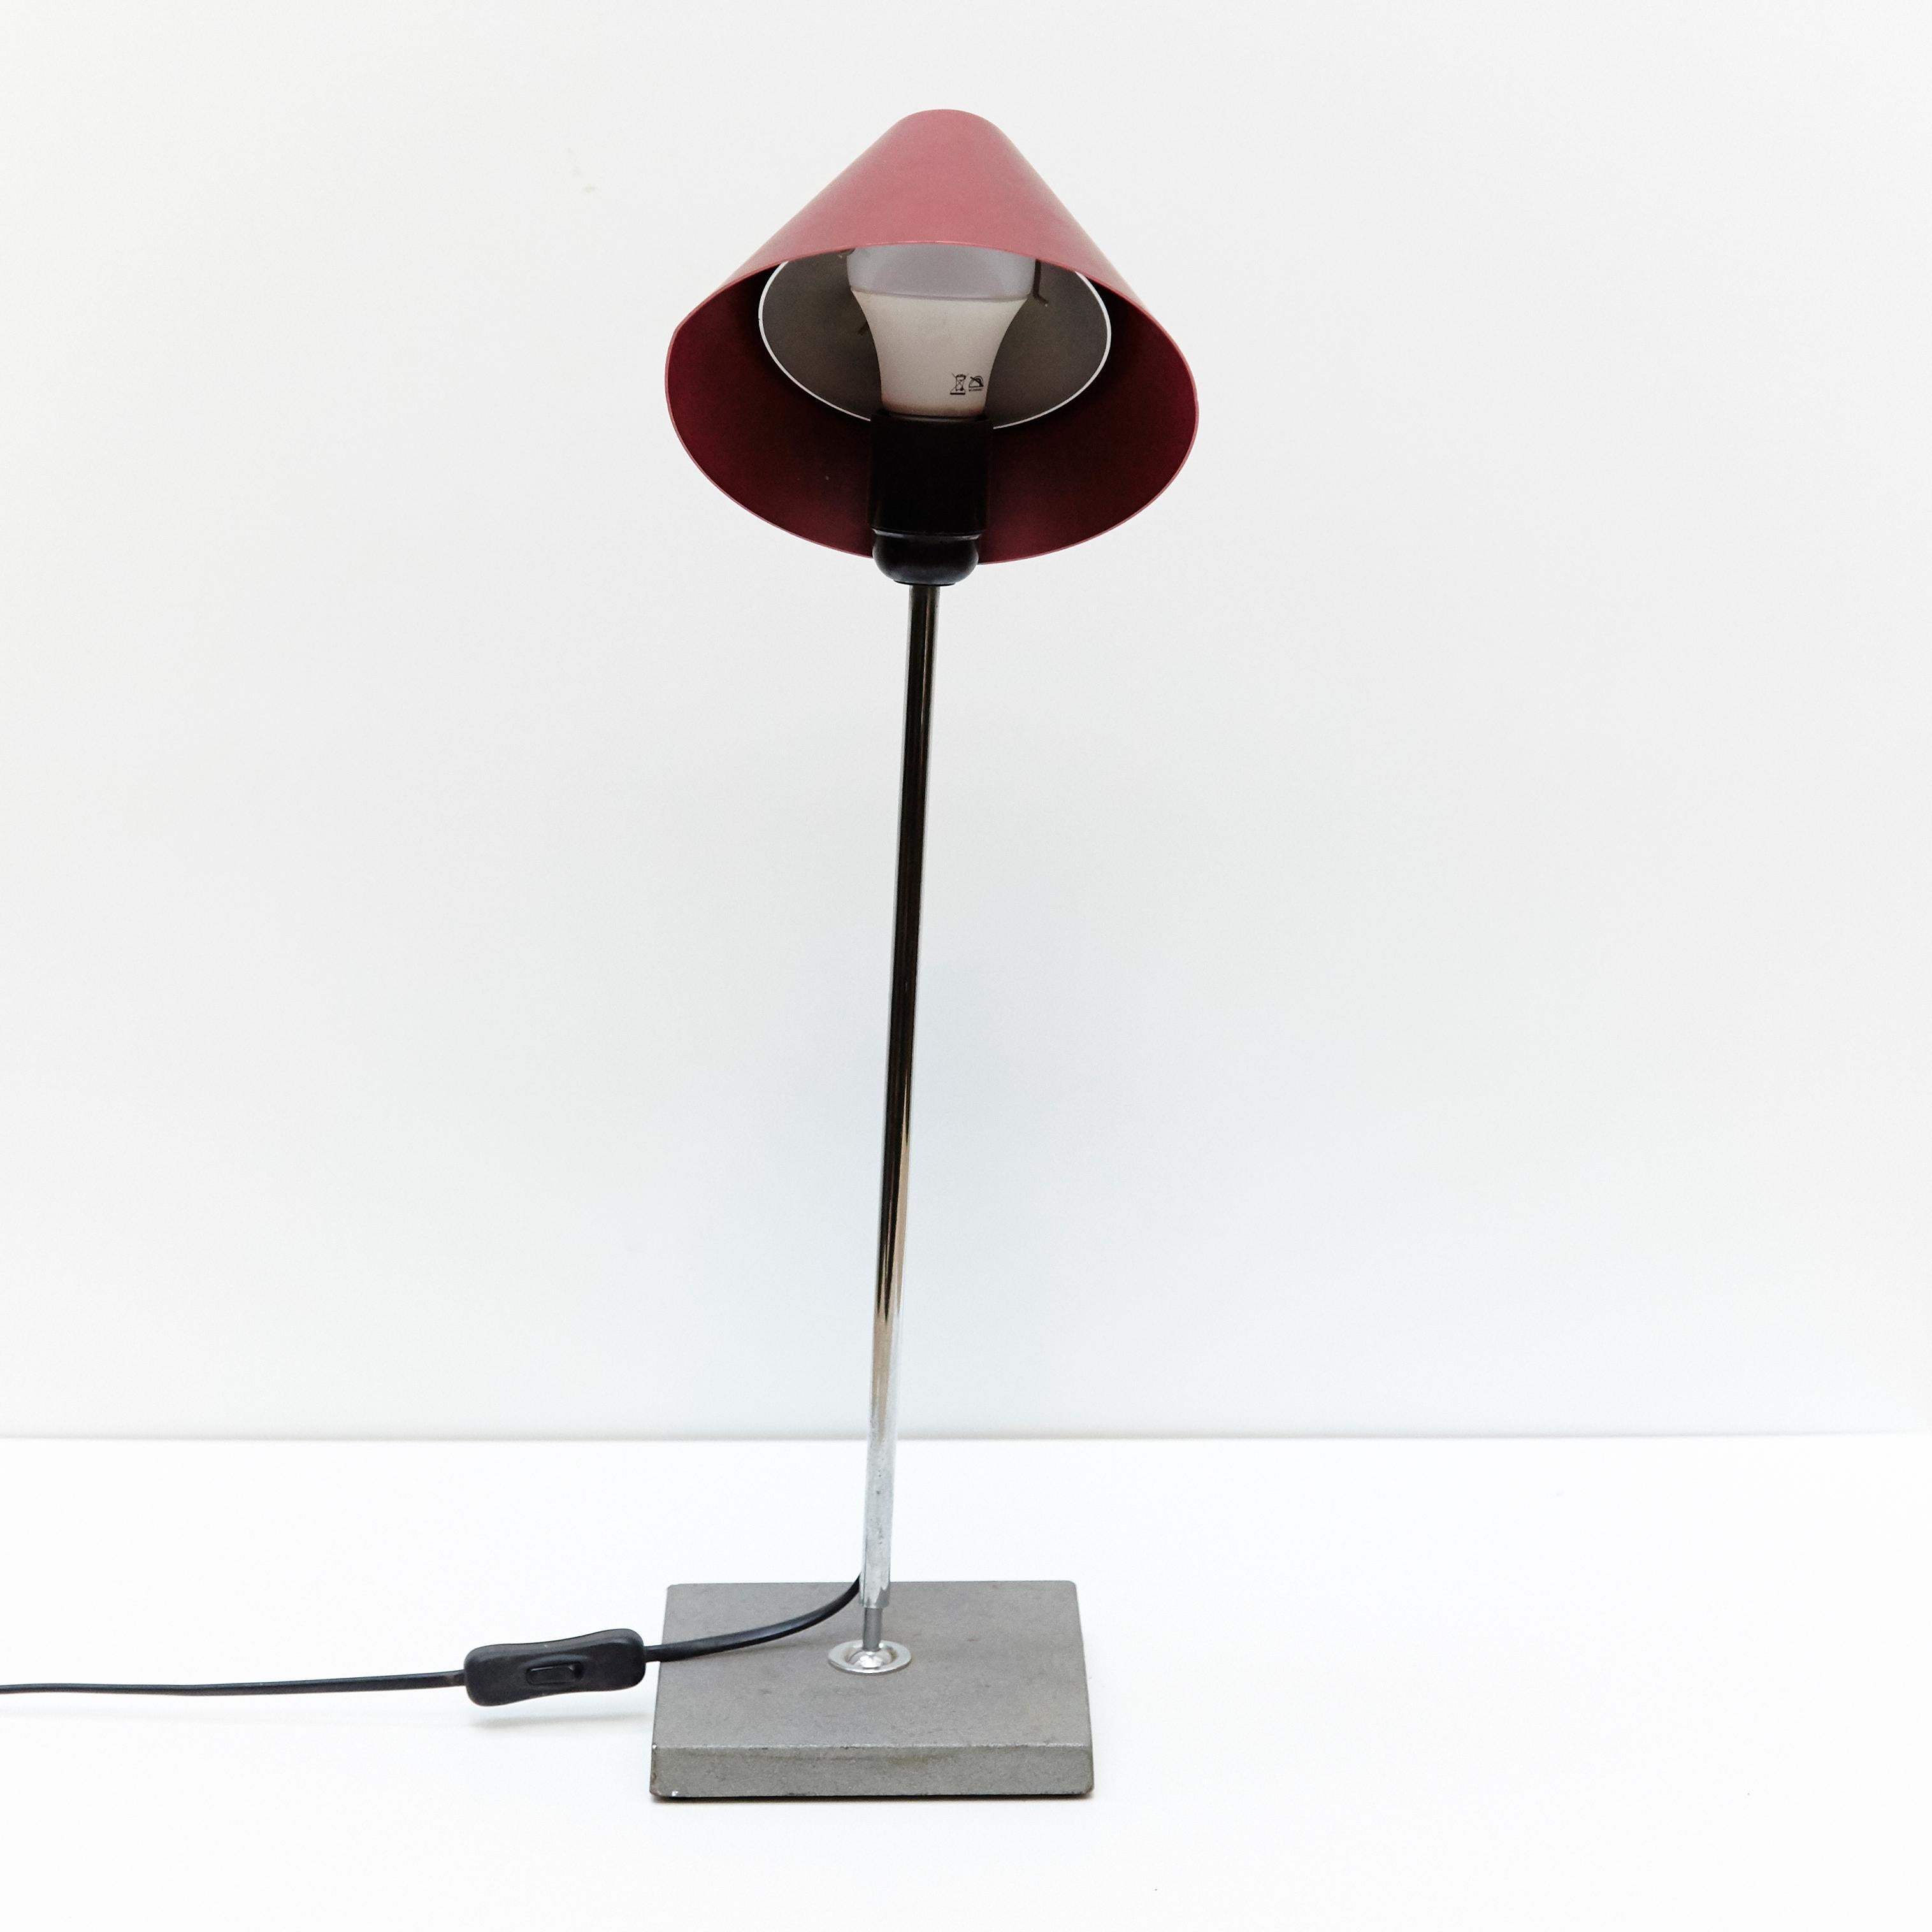 Modern Lamp Designed by Mobles 114, Barcelona, 1978